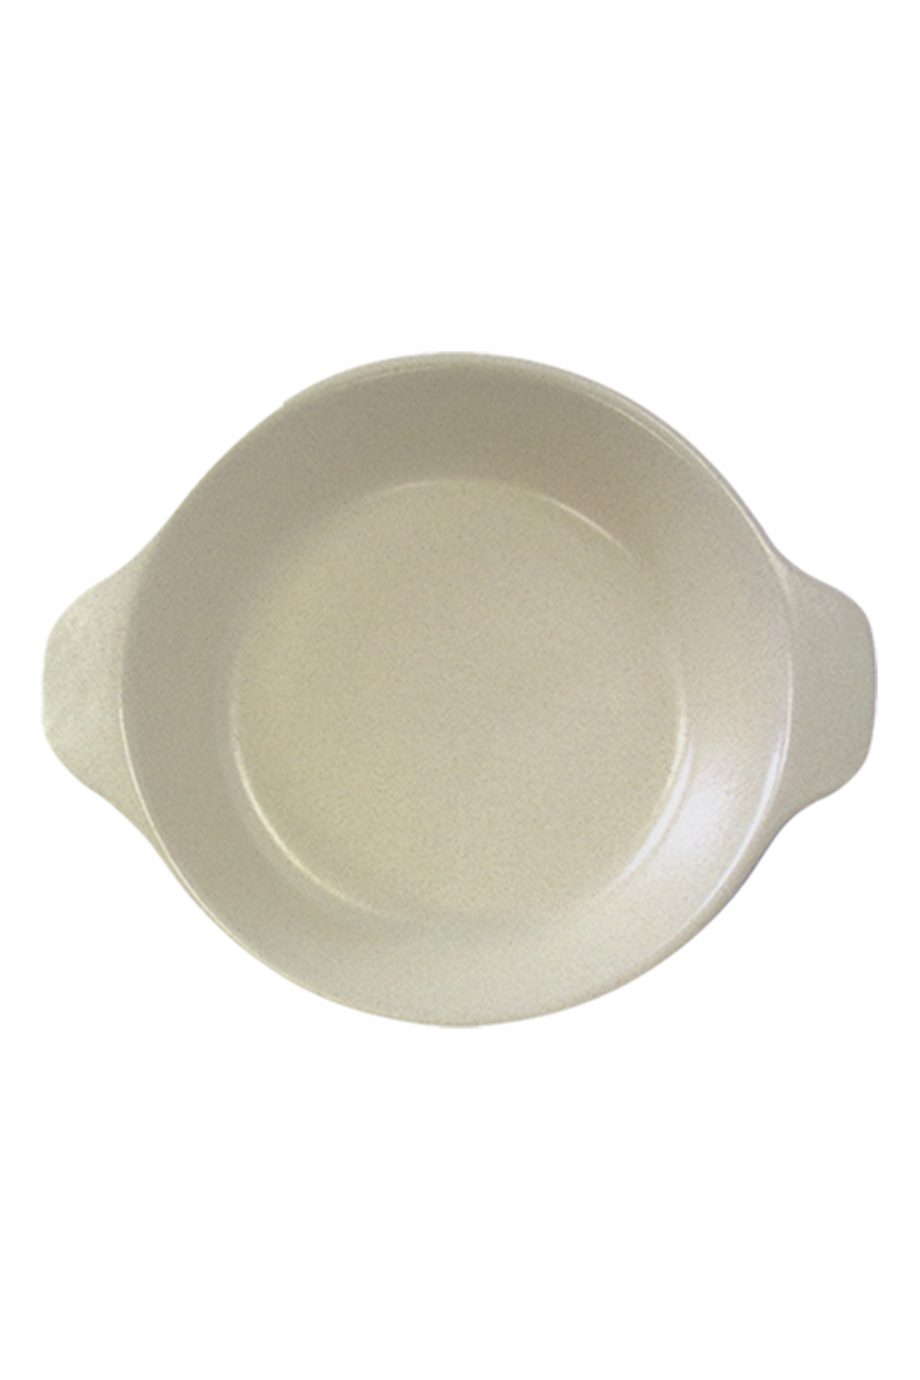 oven bord melk wit glaze ceramic small